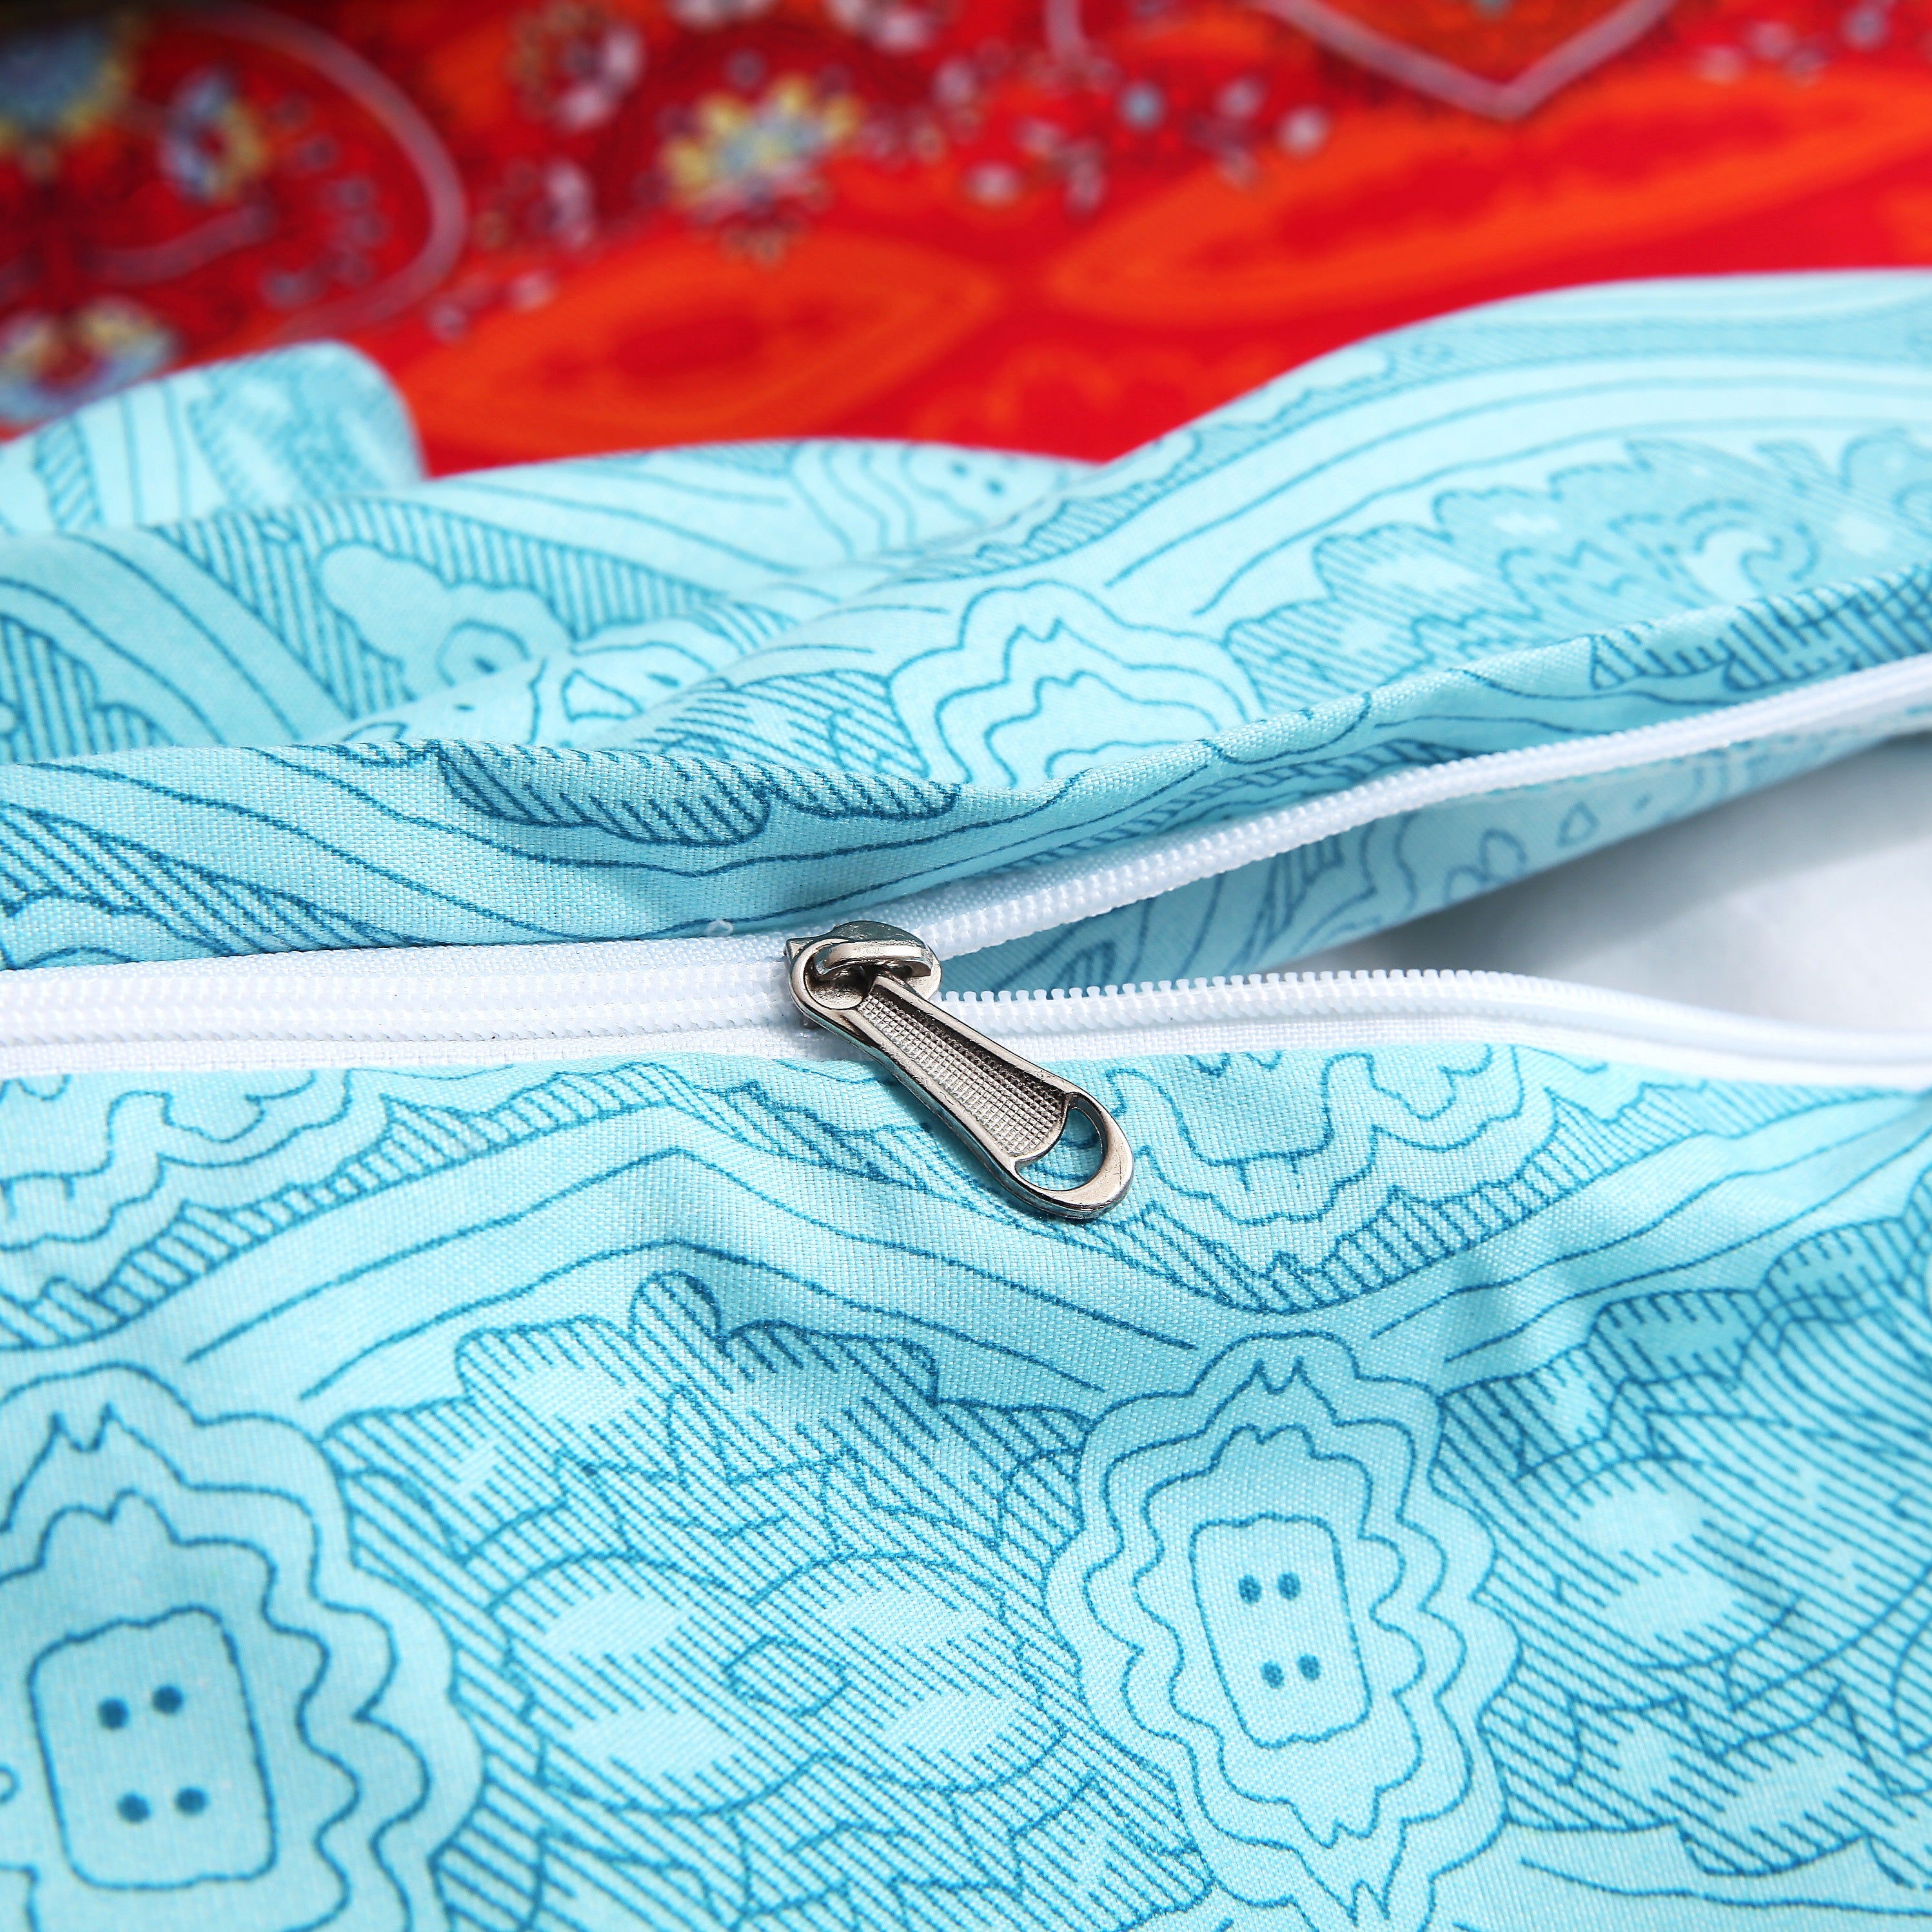 Colorful Boho Mandala Paisley 3-Piece Bedding Set: Duvet Cover and Pillow Shams